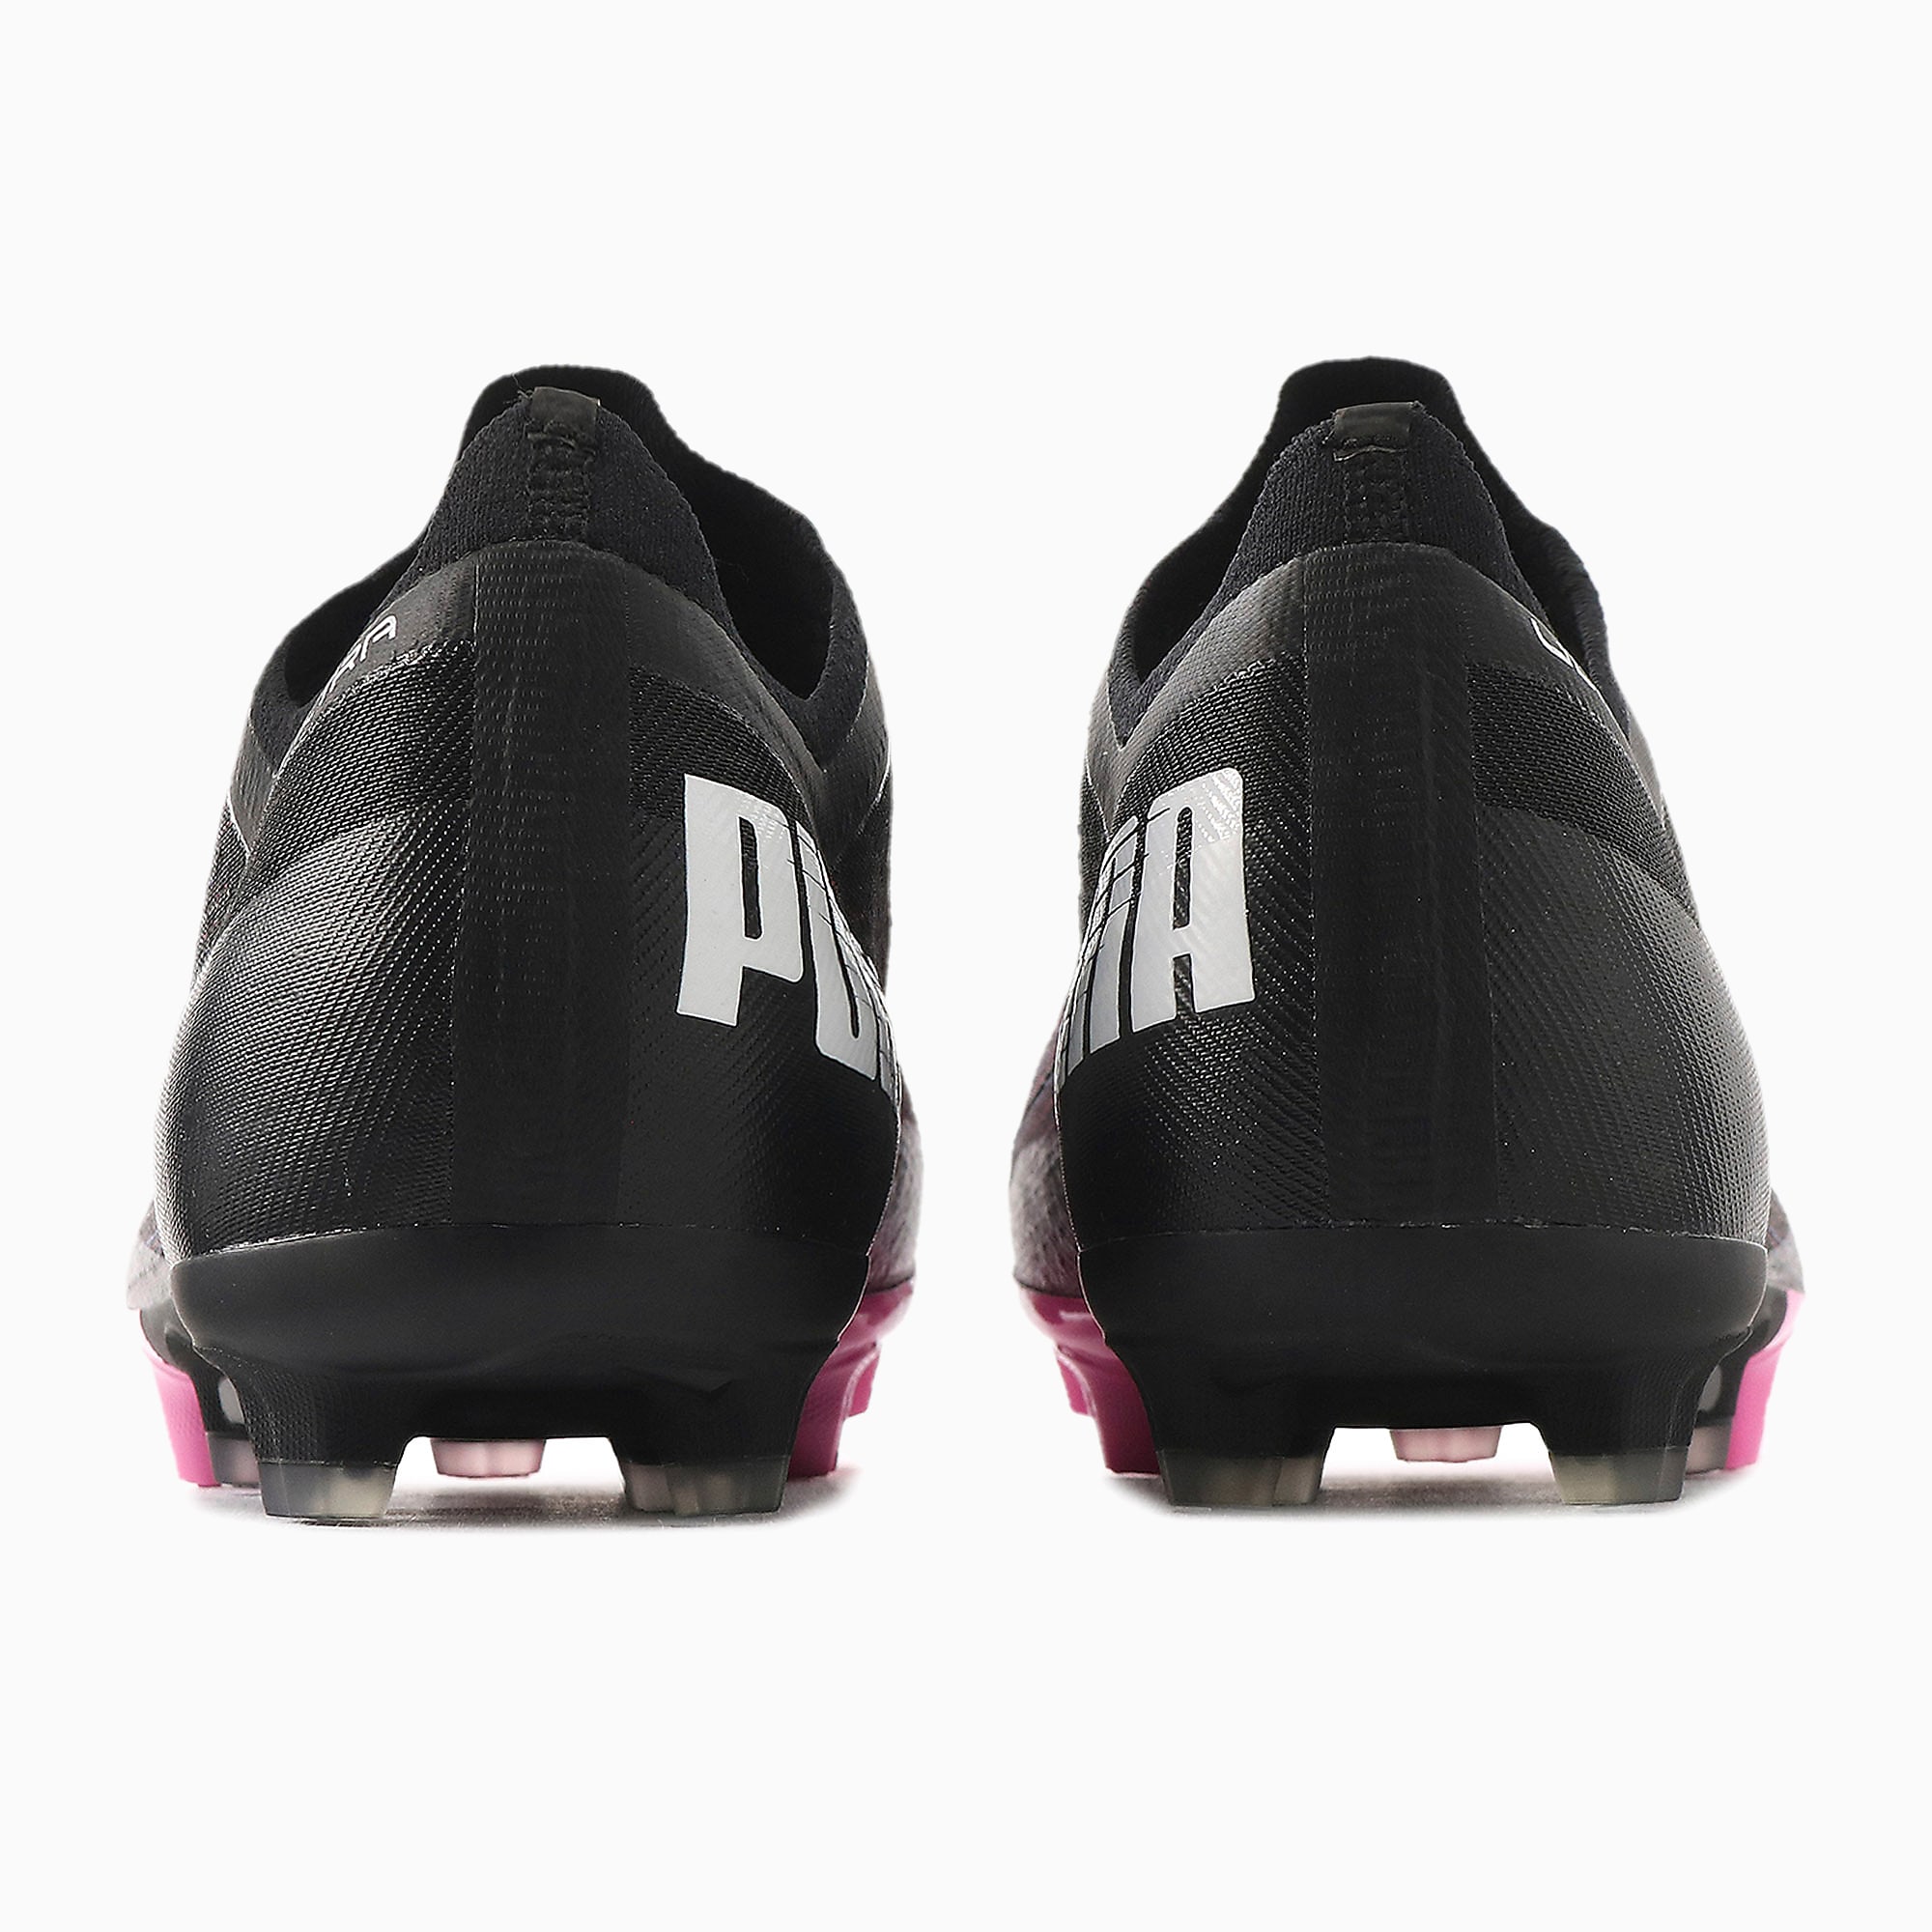 Puma公式 ウルトラ 1 1 Hg サッカー スパイク 硬い土 人工芝用 メンズ Puma Black Luminous Pink プーマ セール プーマ